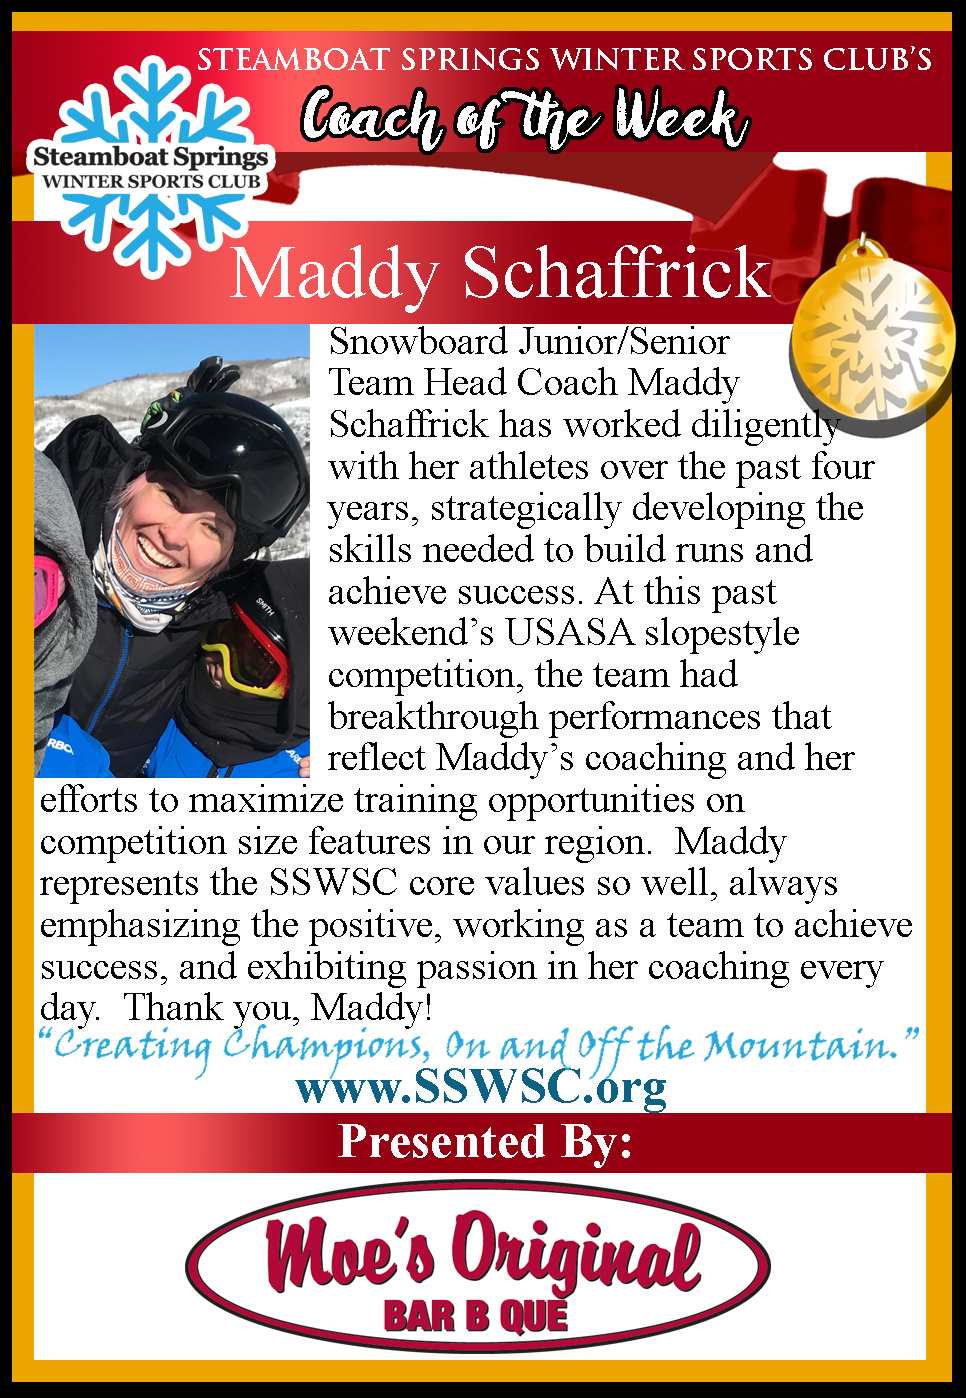 Coach of the Week, Maddy Schaffrick